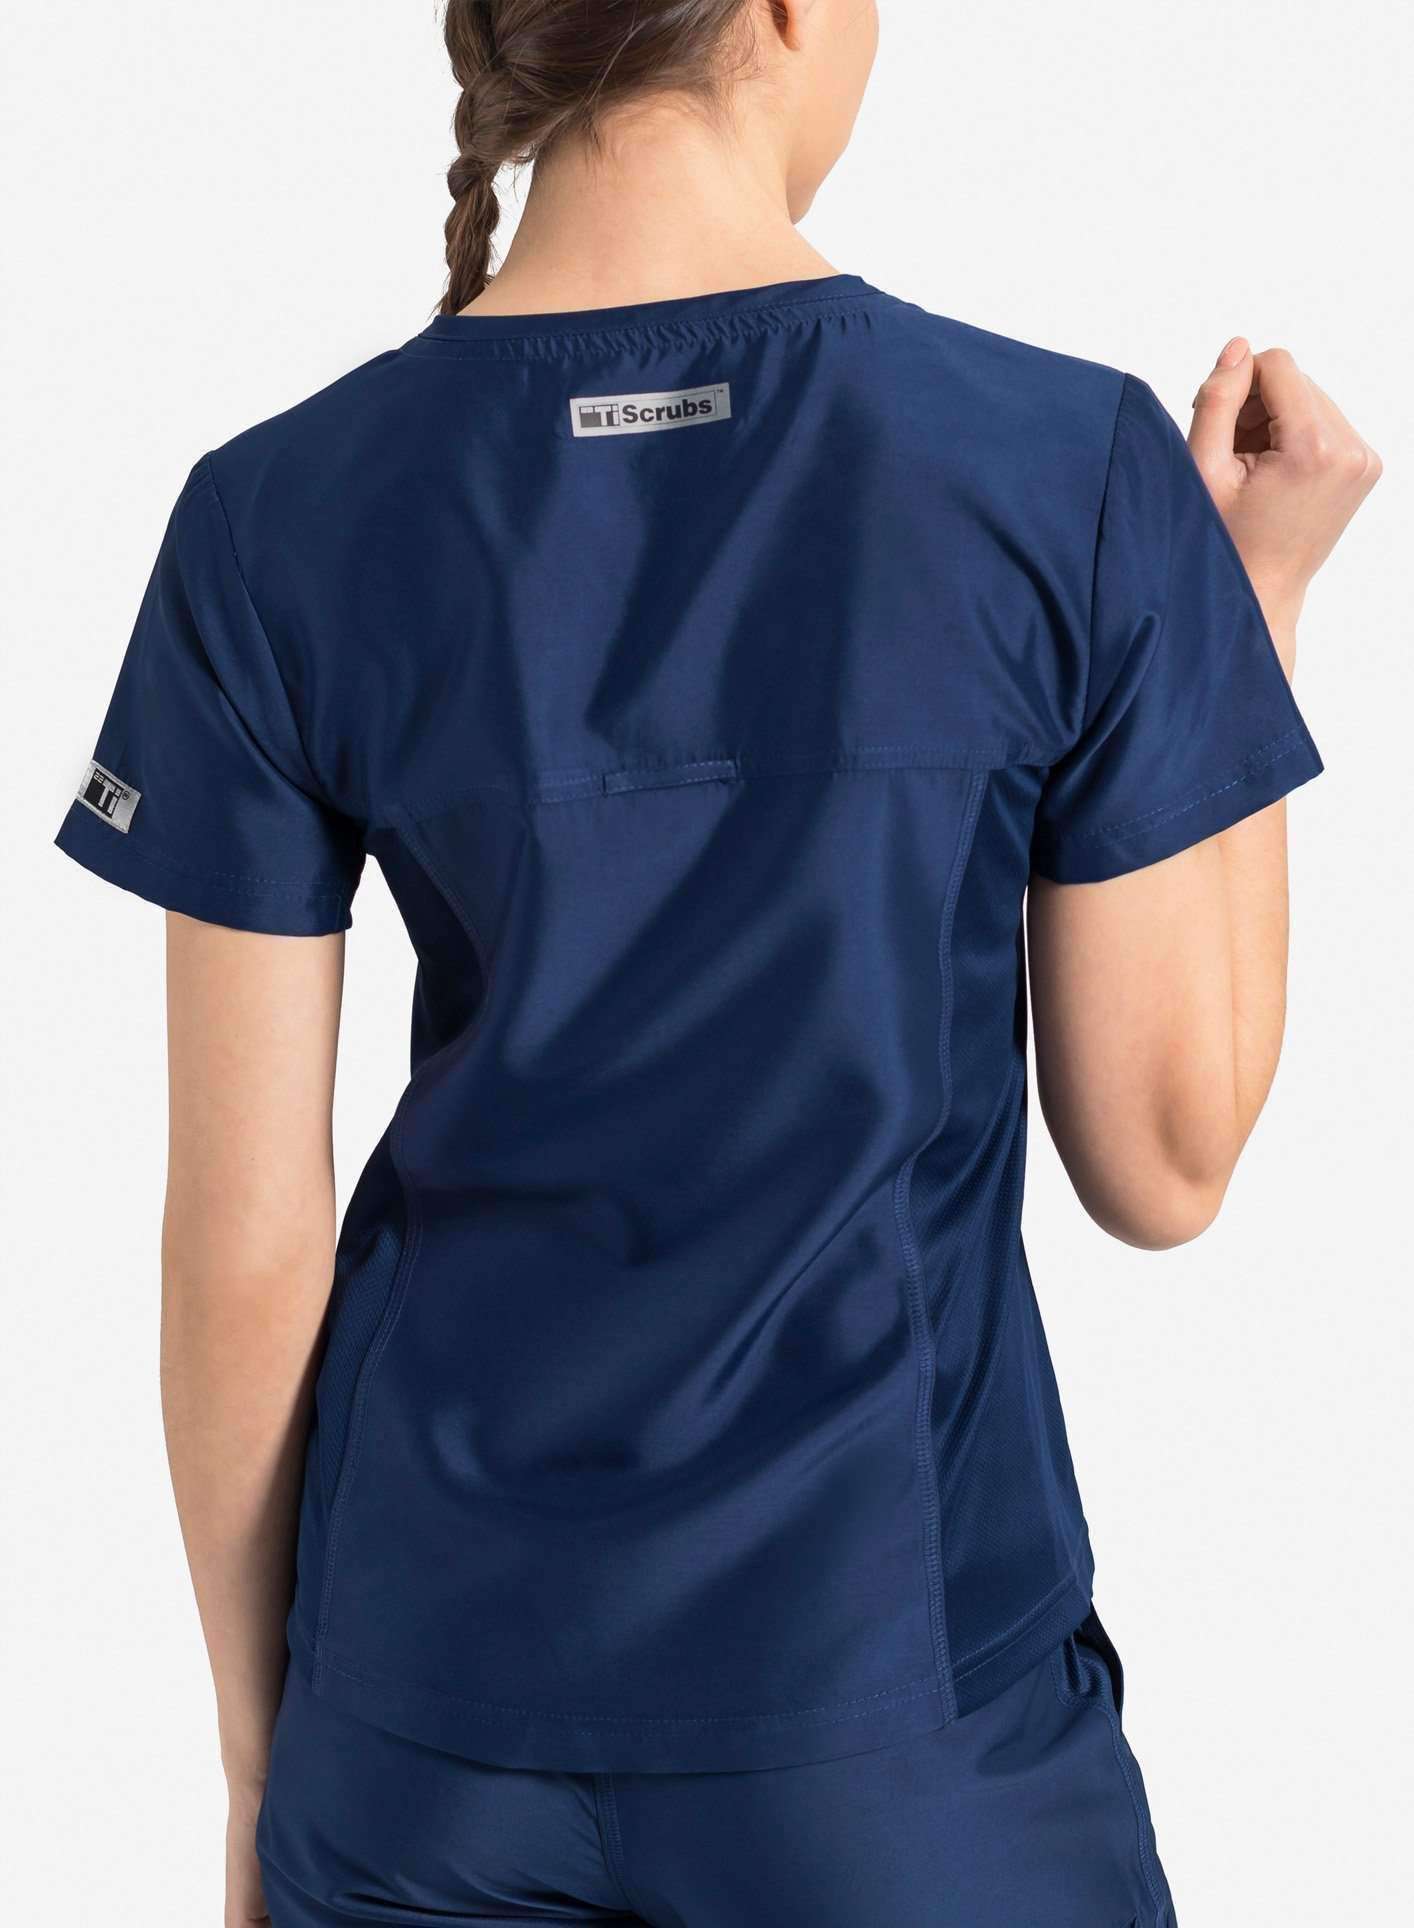 womens Elements short sleeve hidden pocket scrub top navy-blue